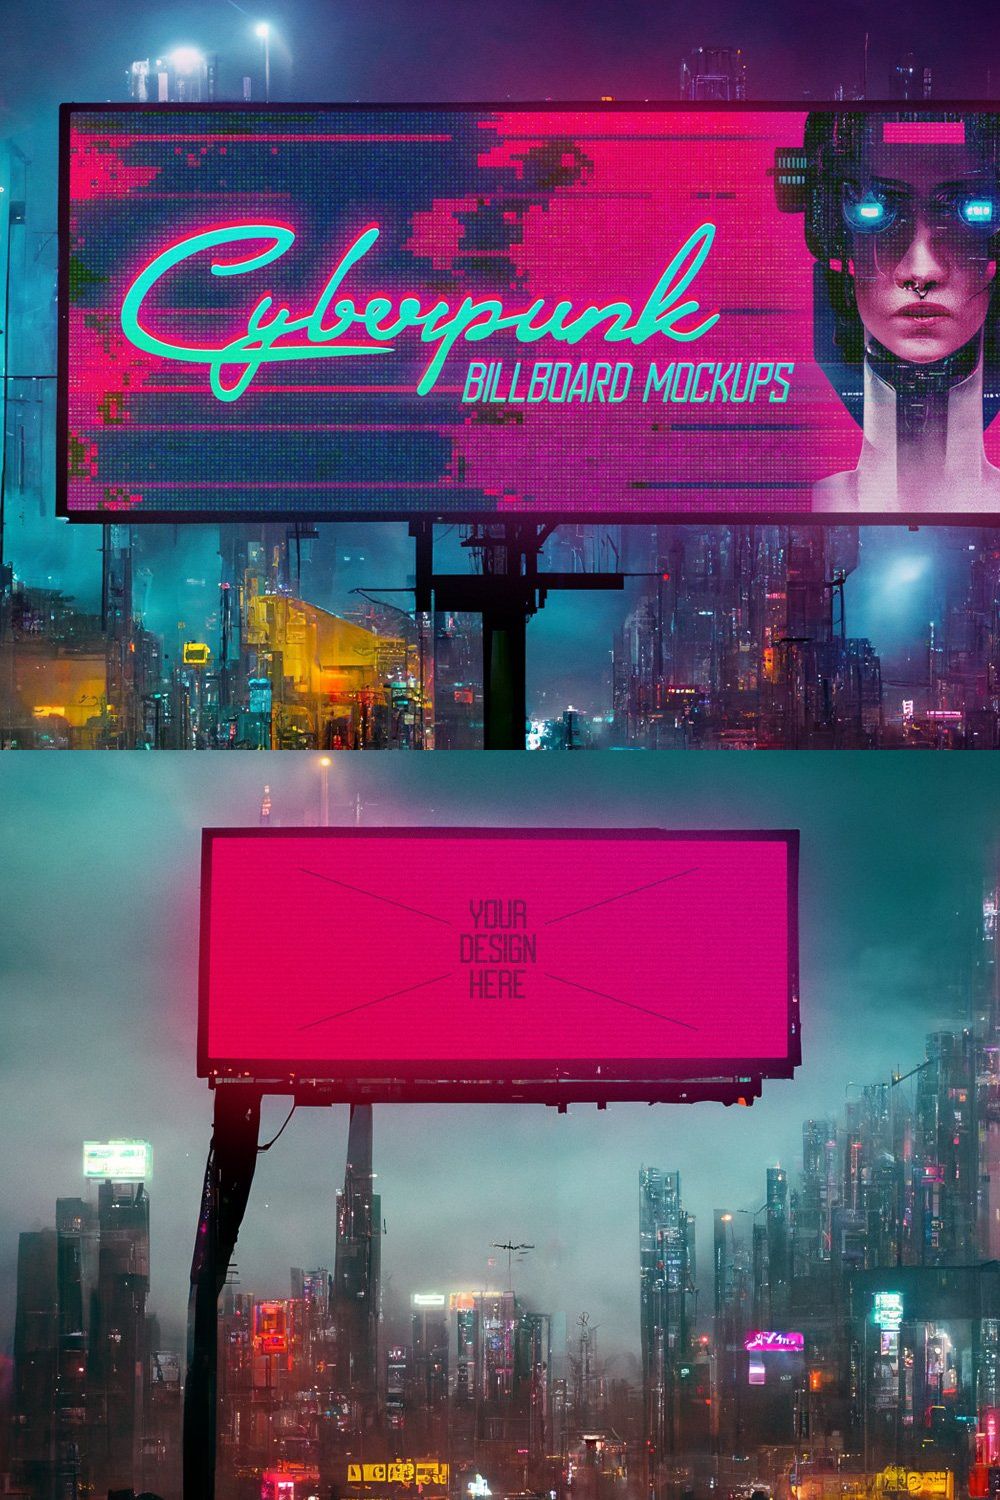 Cyberpunk Billboard Mockups pinterest preview image.